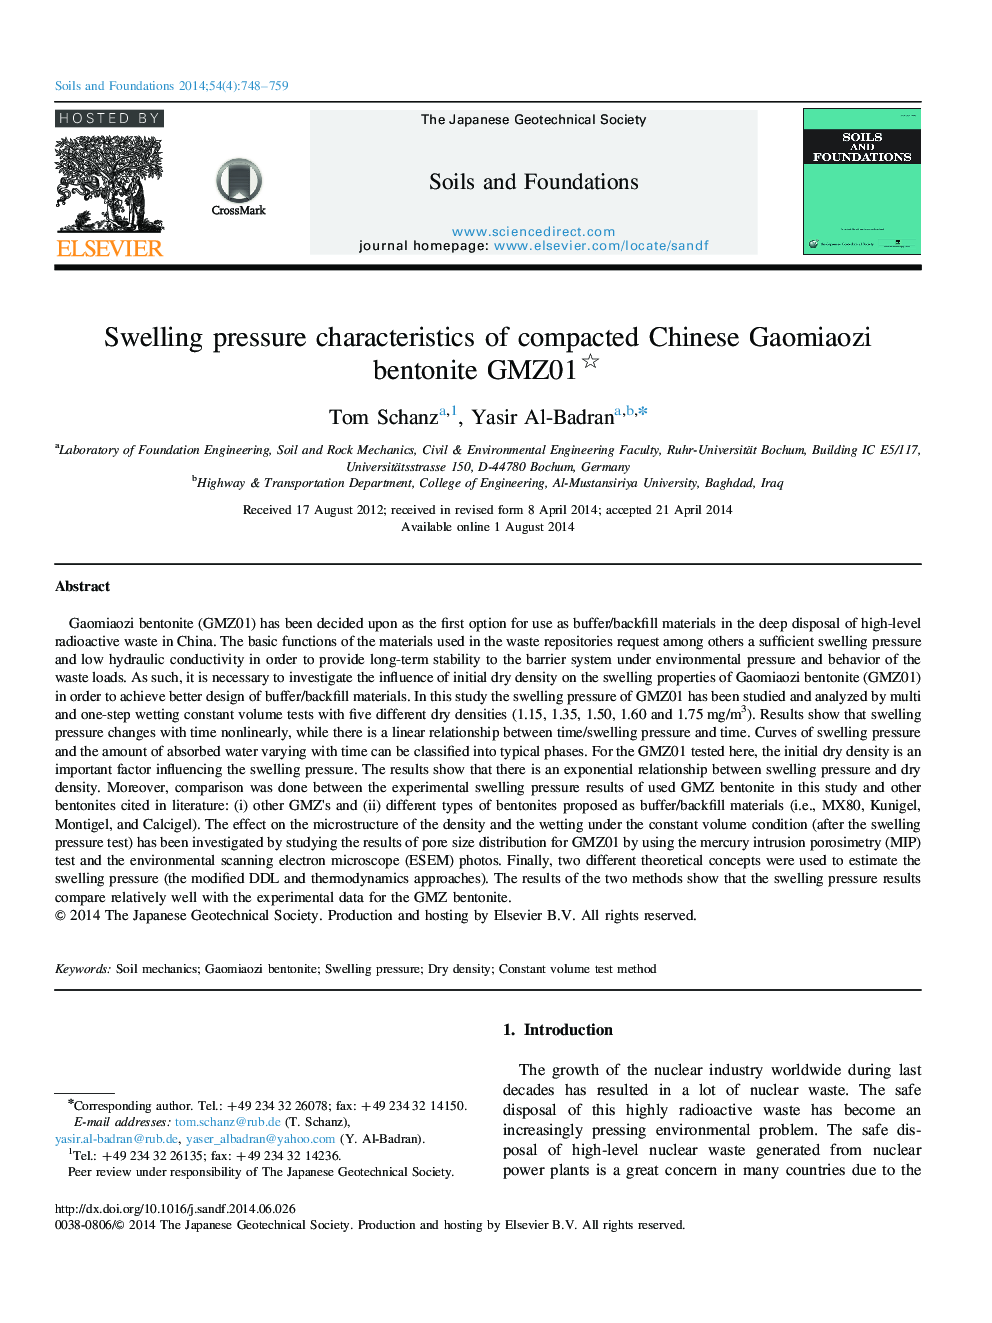 Swelling pressure characteristics of compacted Chinese Gaomiaozi bentonite GMZ01 